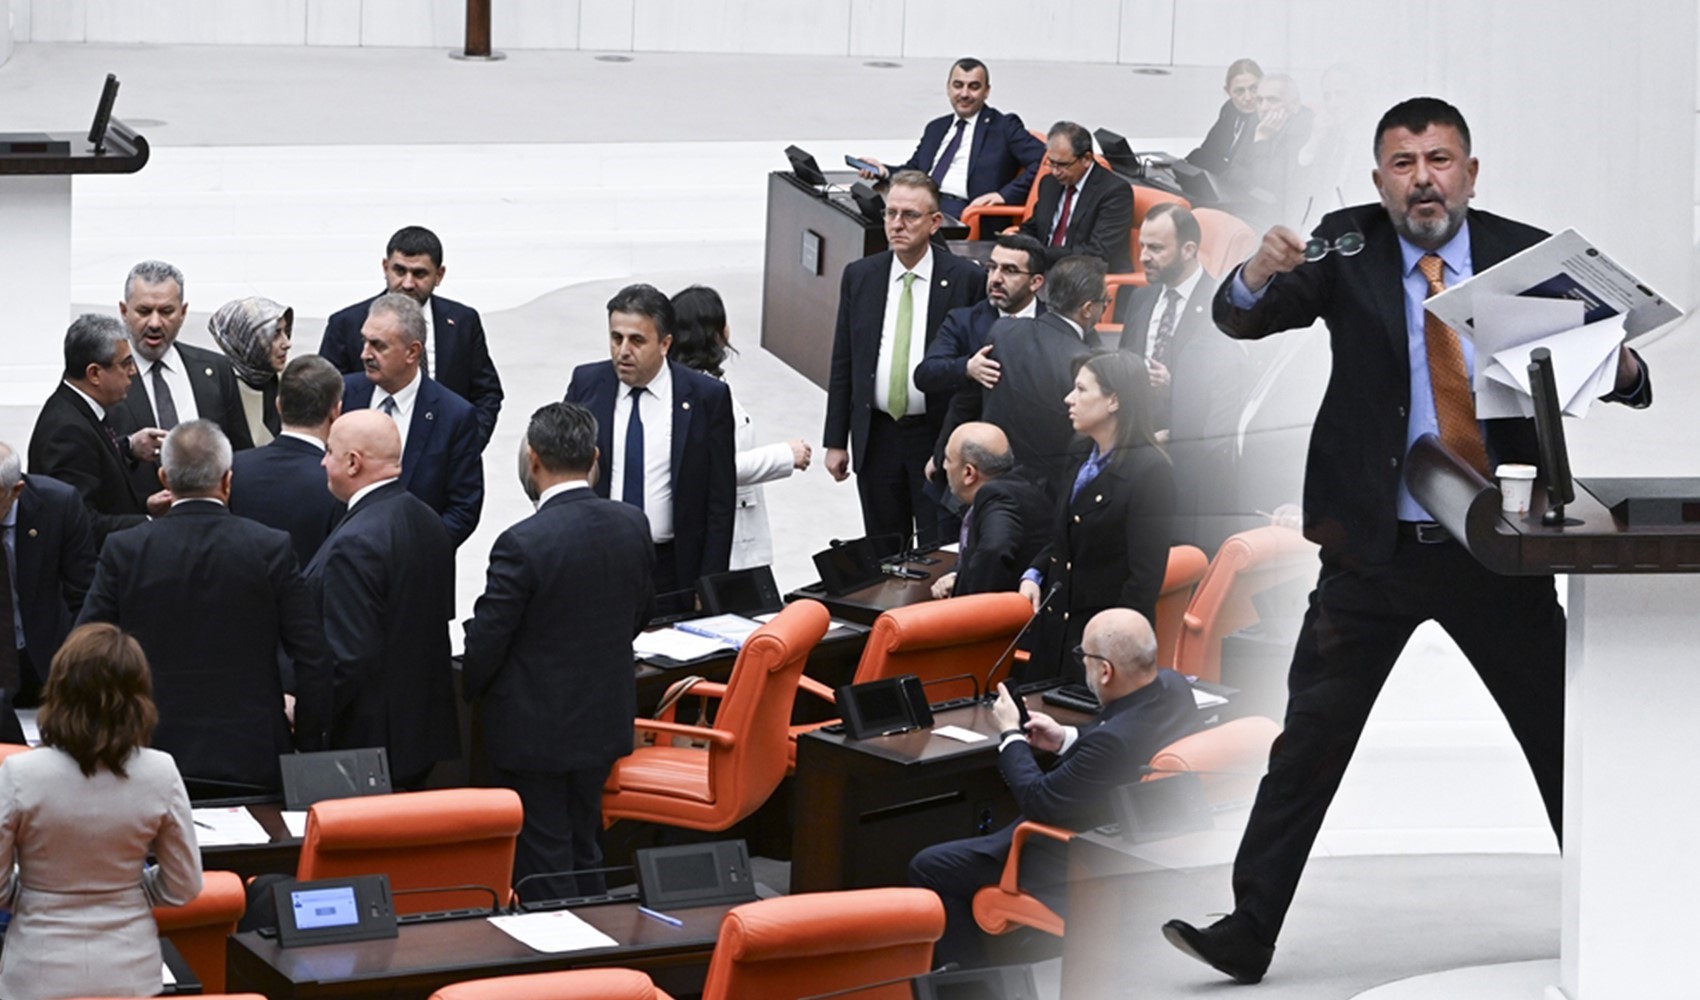 Meclis'te tansiyon yükseldi, hakaretler havada uçtu: AKP'liler laf atınca CHP'li Ağbaba sert tepki gösterdi